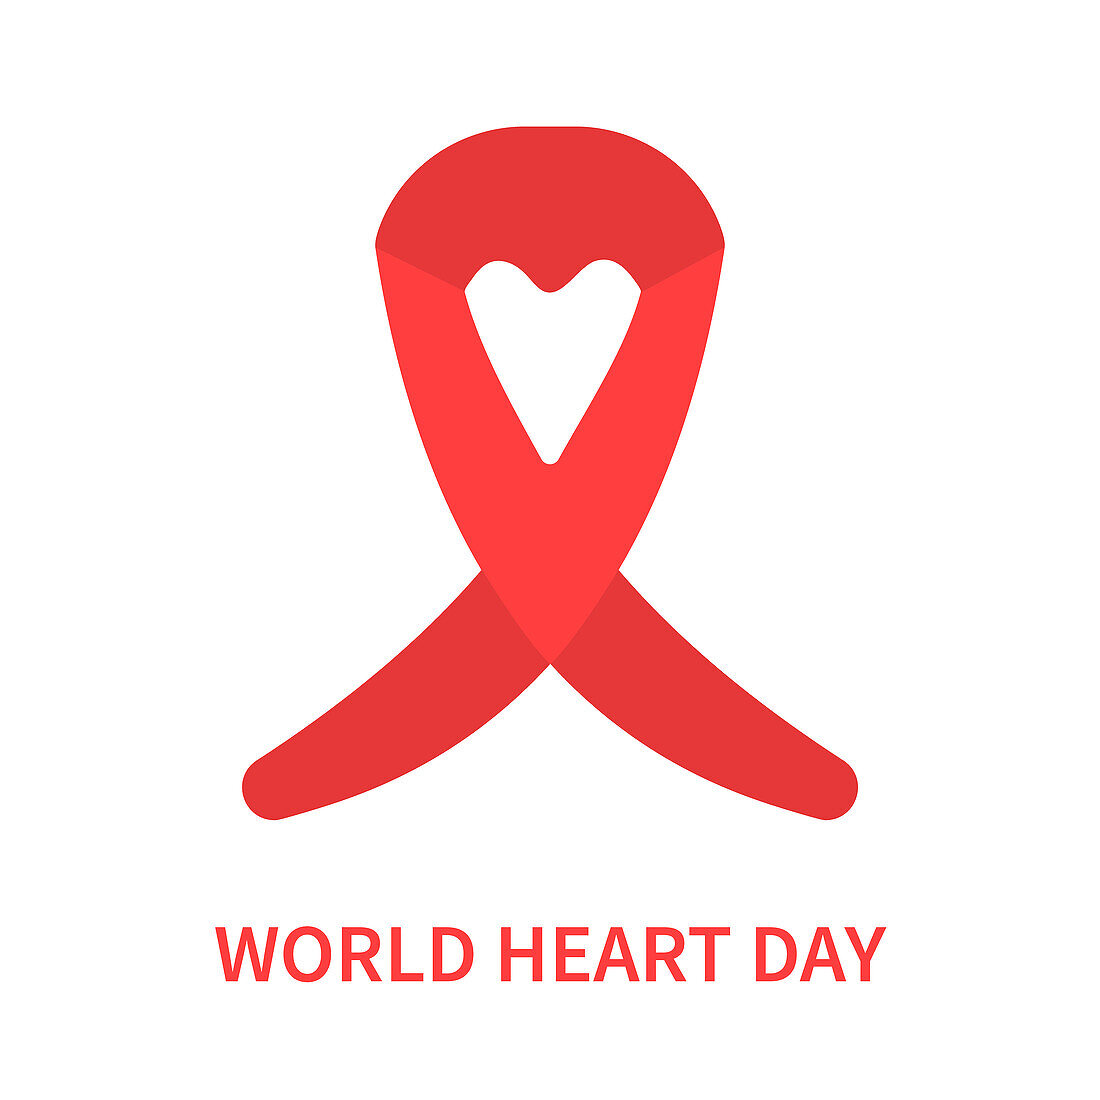 World heart day, conceptual illustration